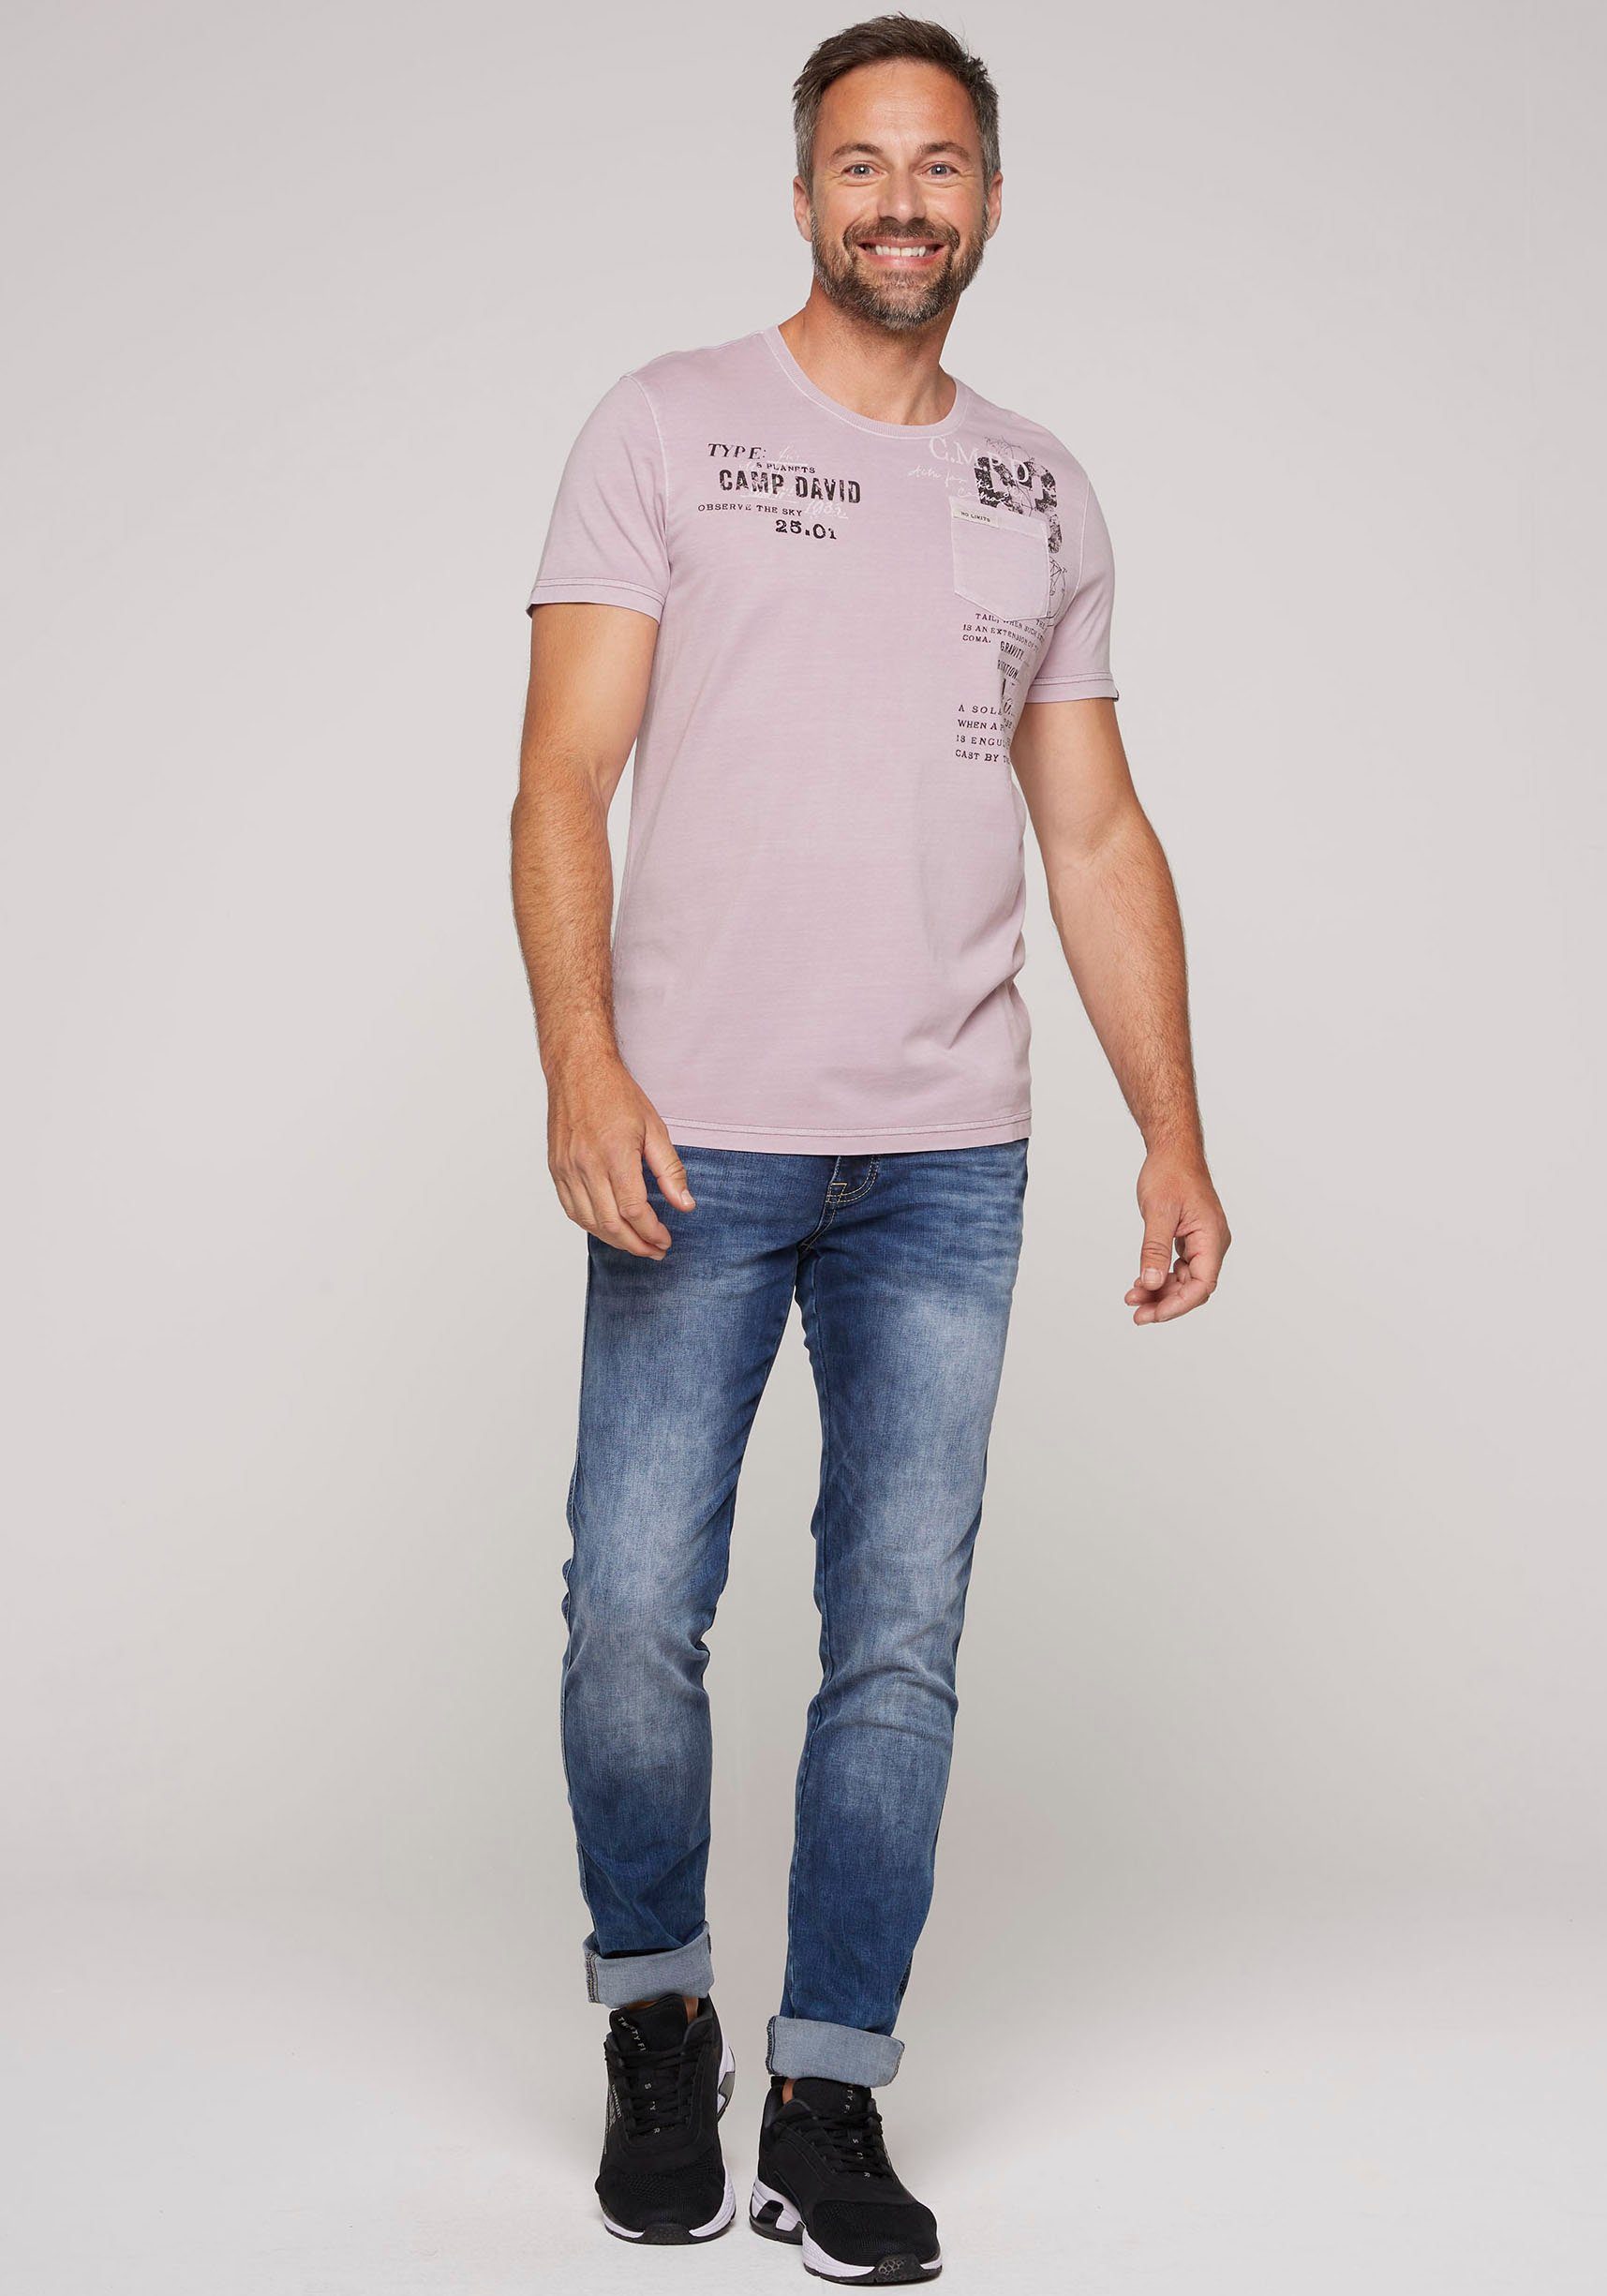 CAMP DAVID mit T-Shirt violet french Kontrastnähten